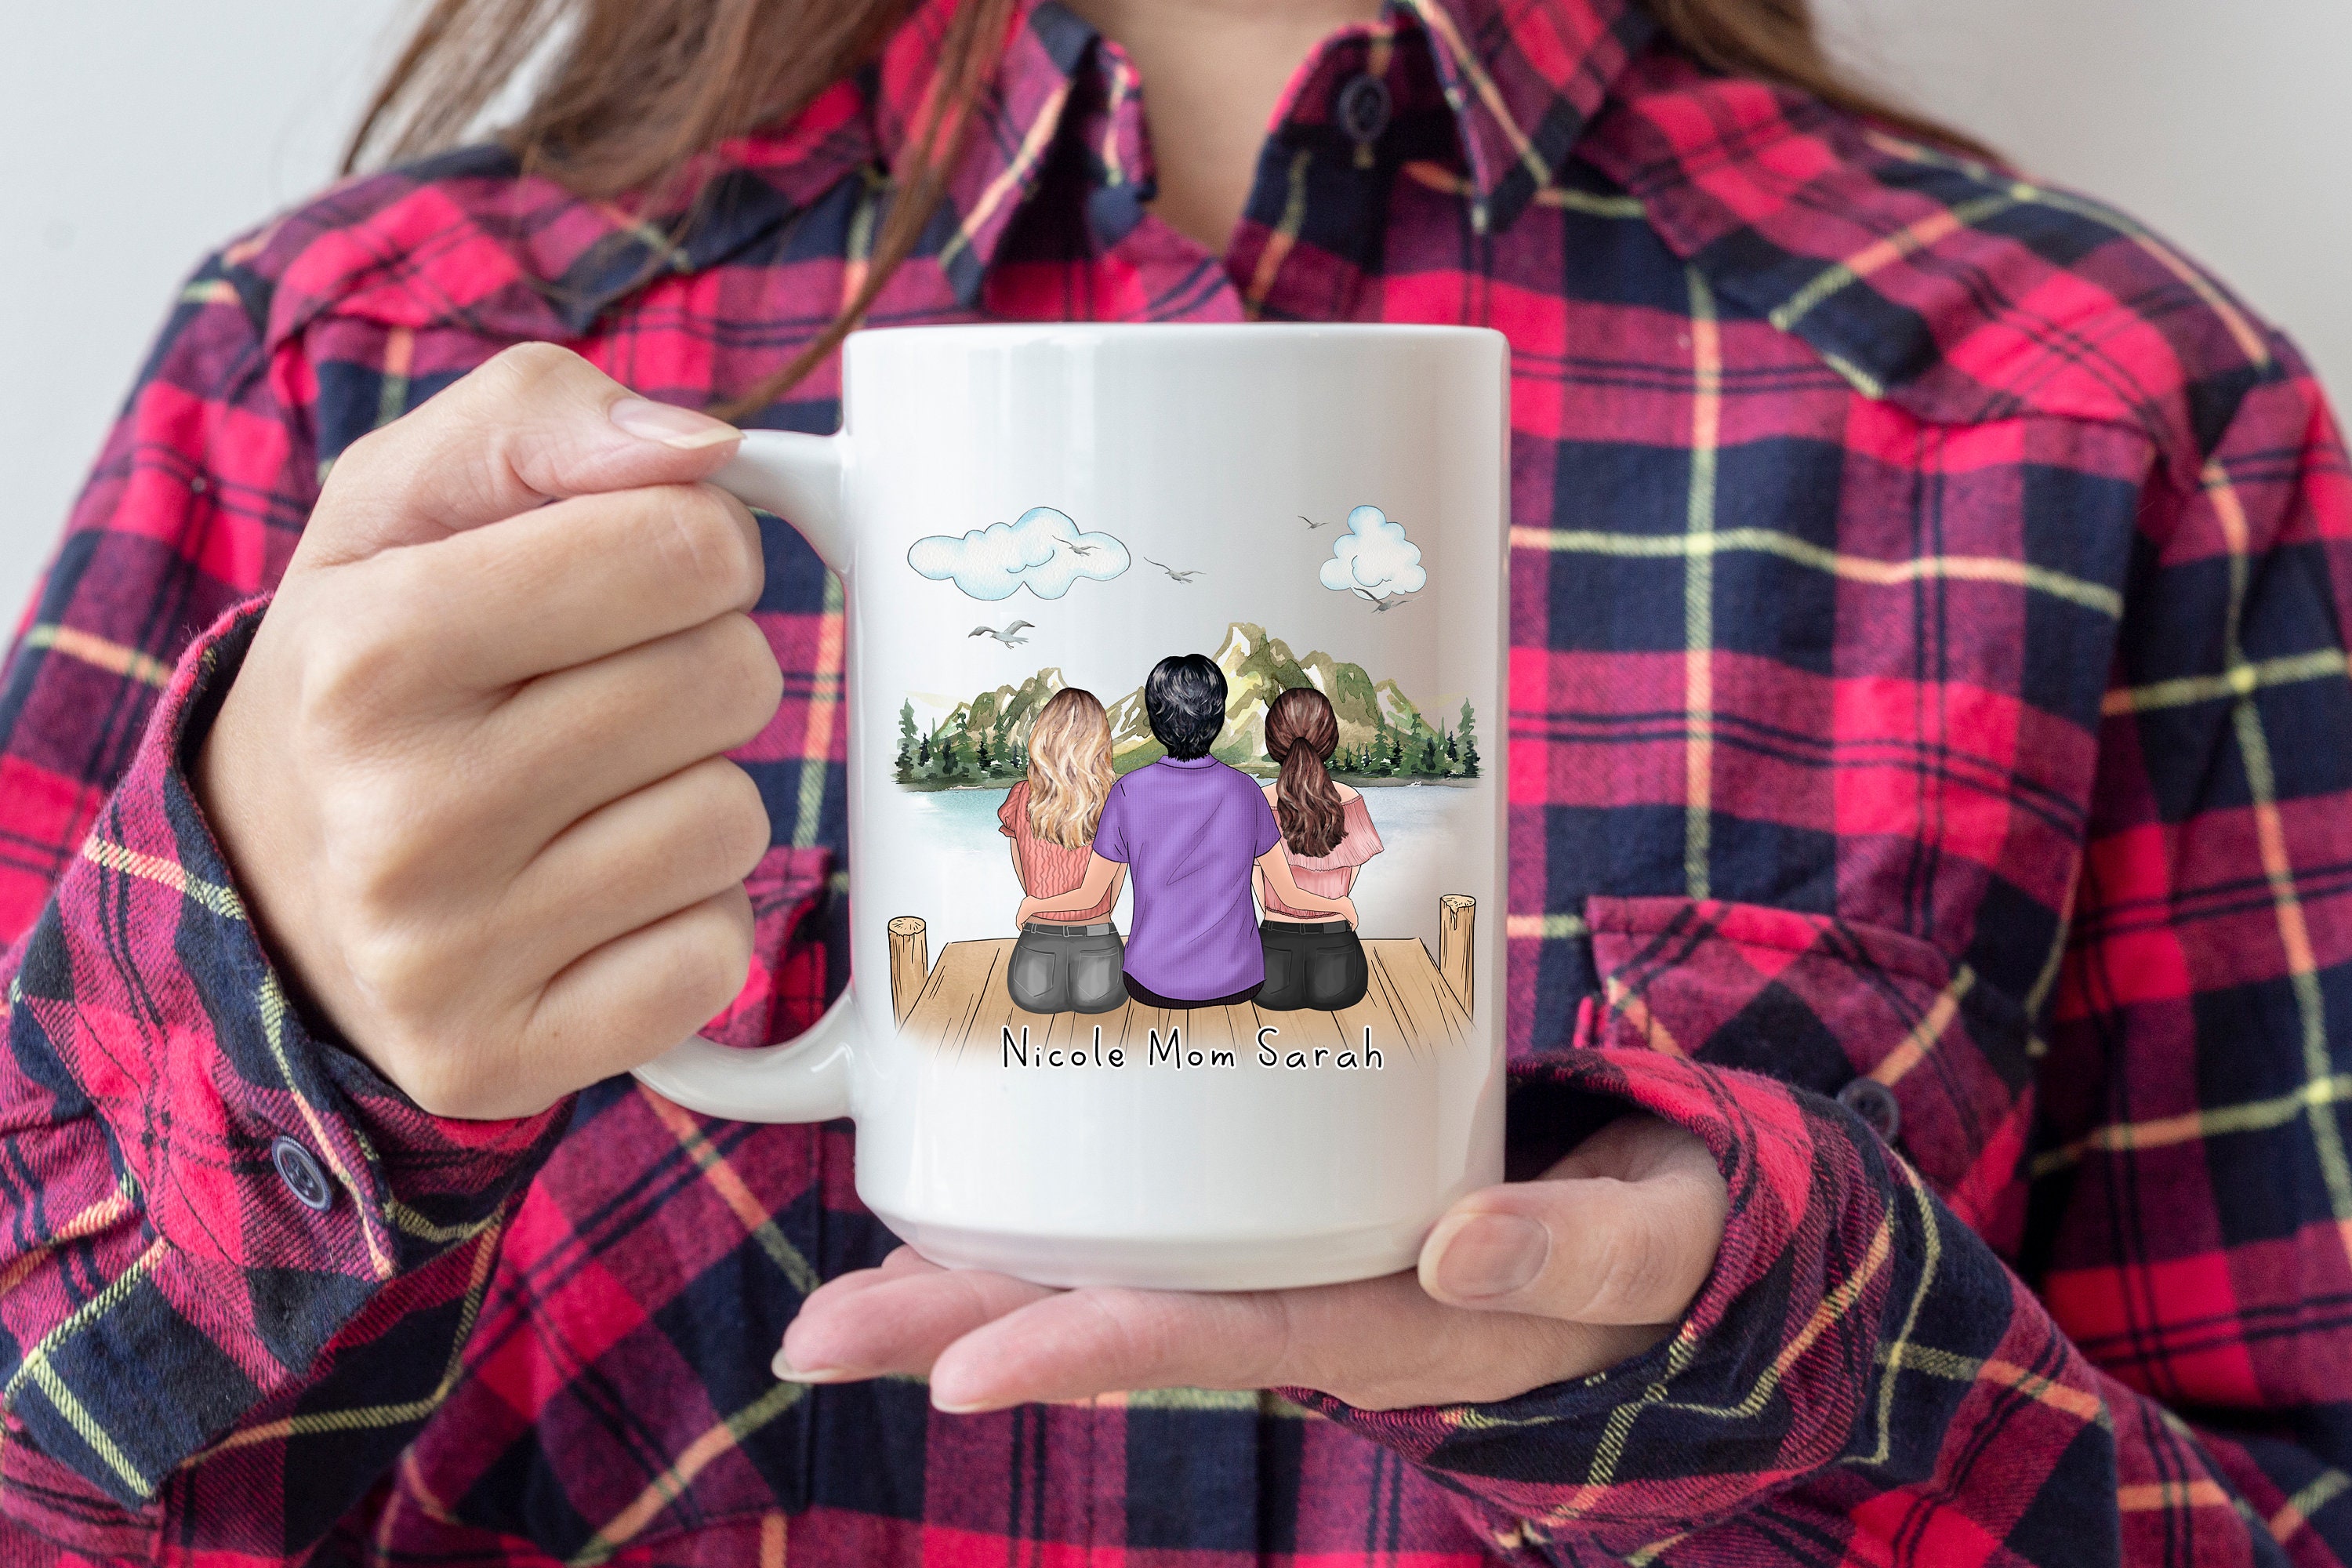 DIY Personalized Mugs – Like Mother, Like Daughter